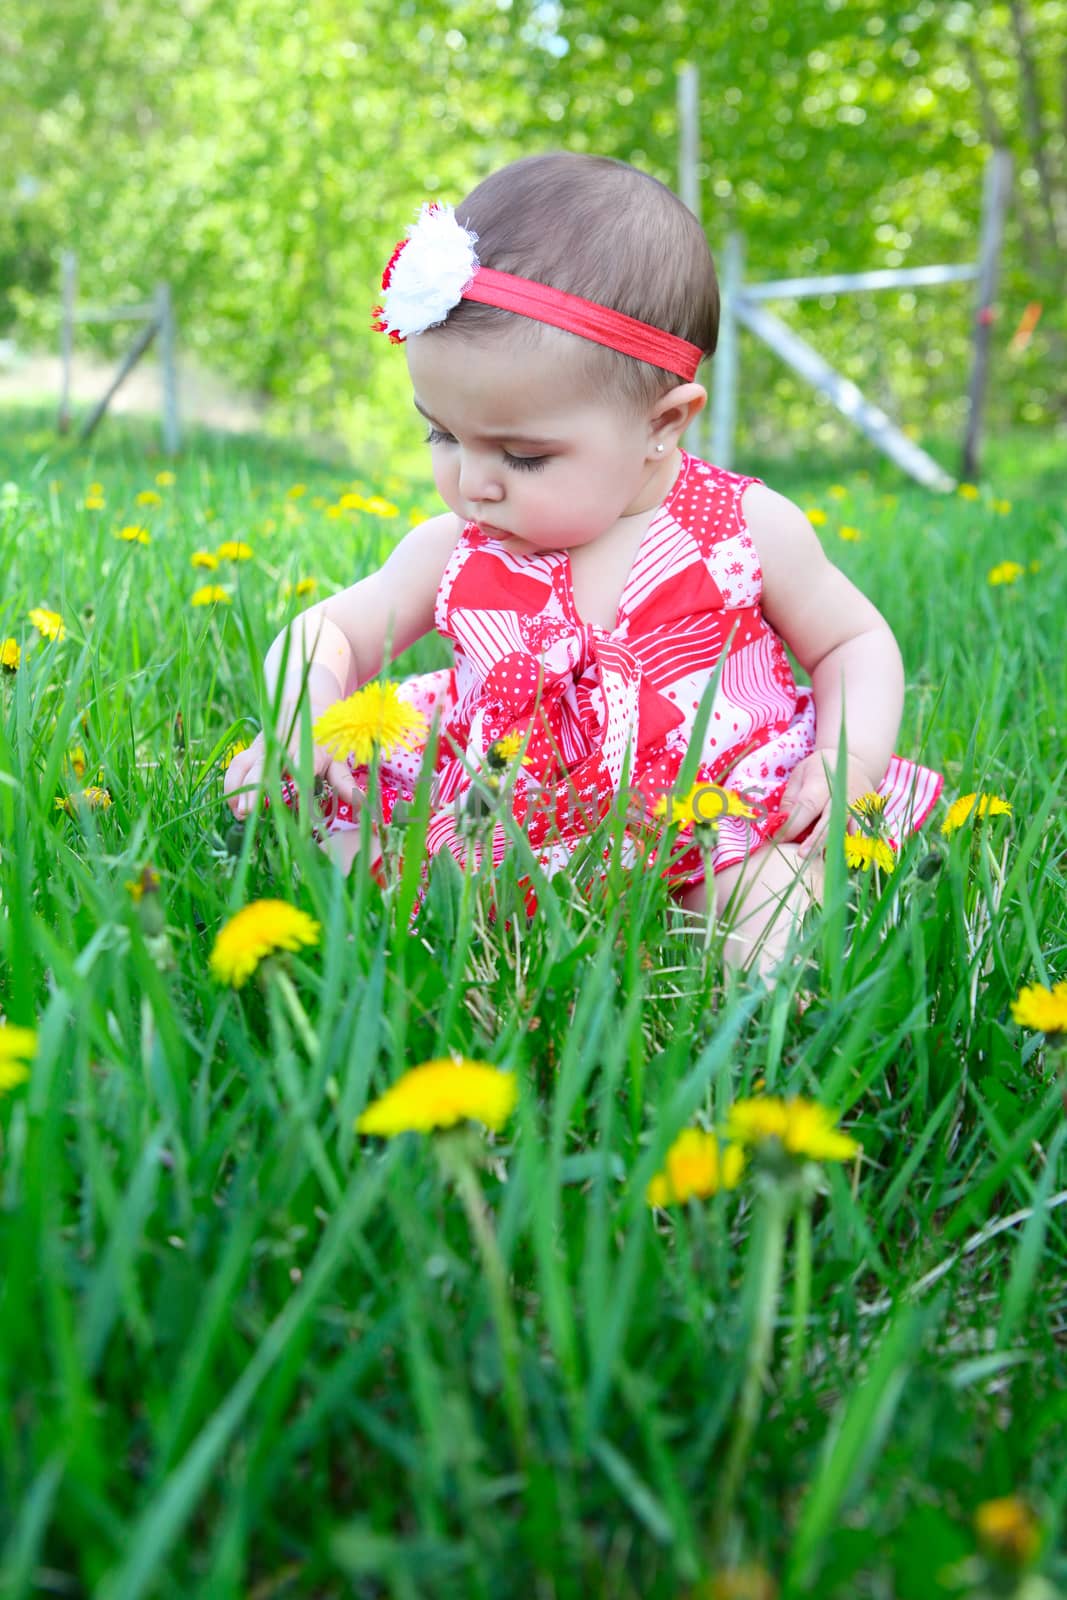 Brunette baby girl sitting in a field with dandelions